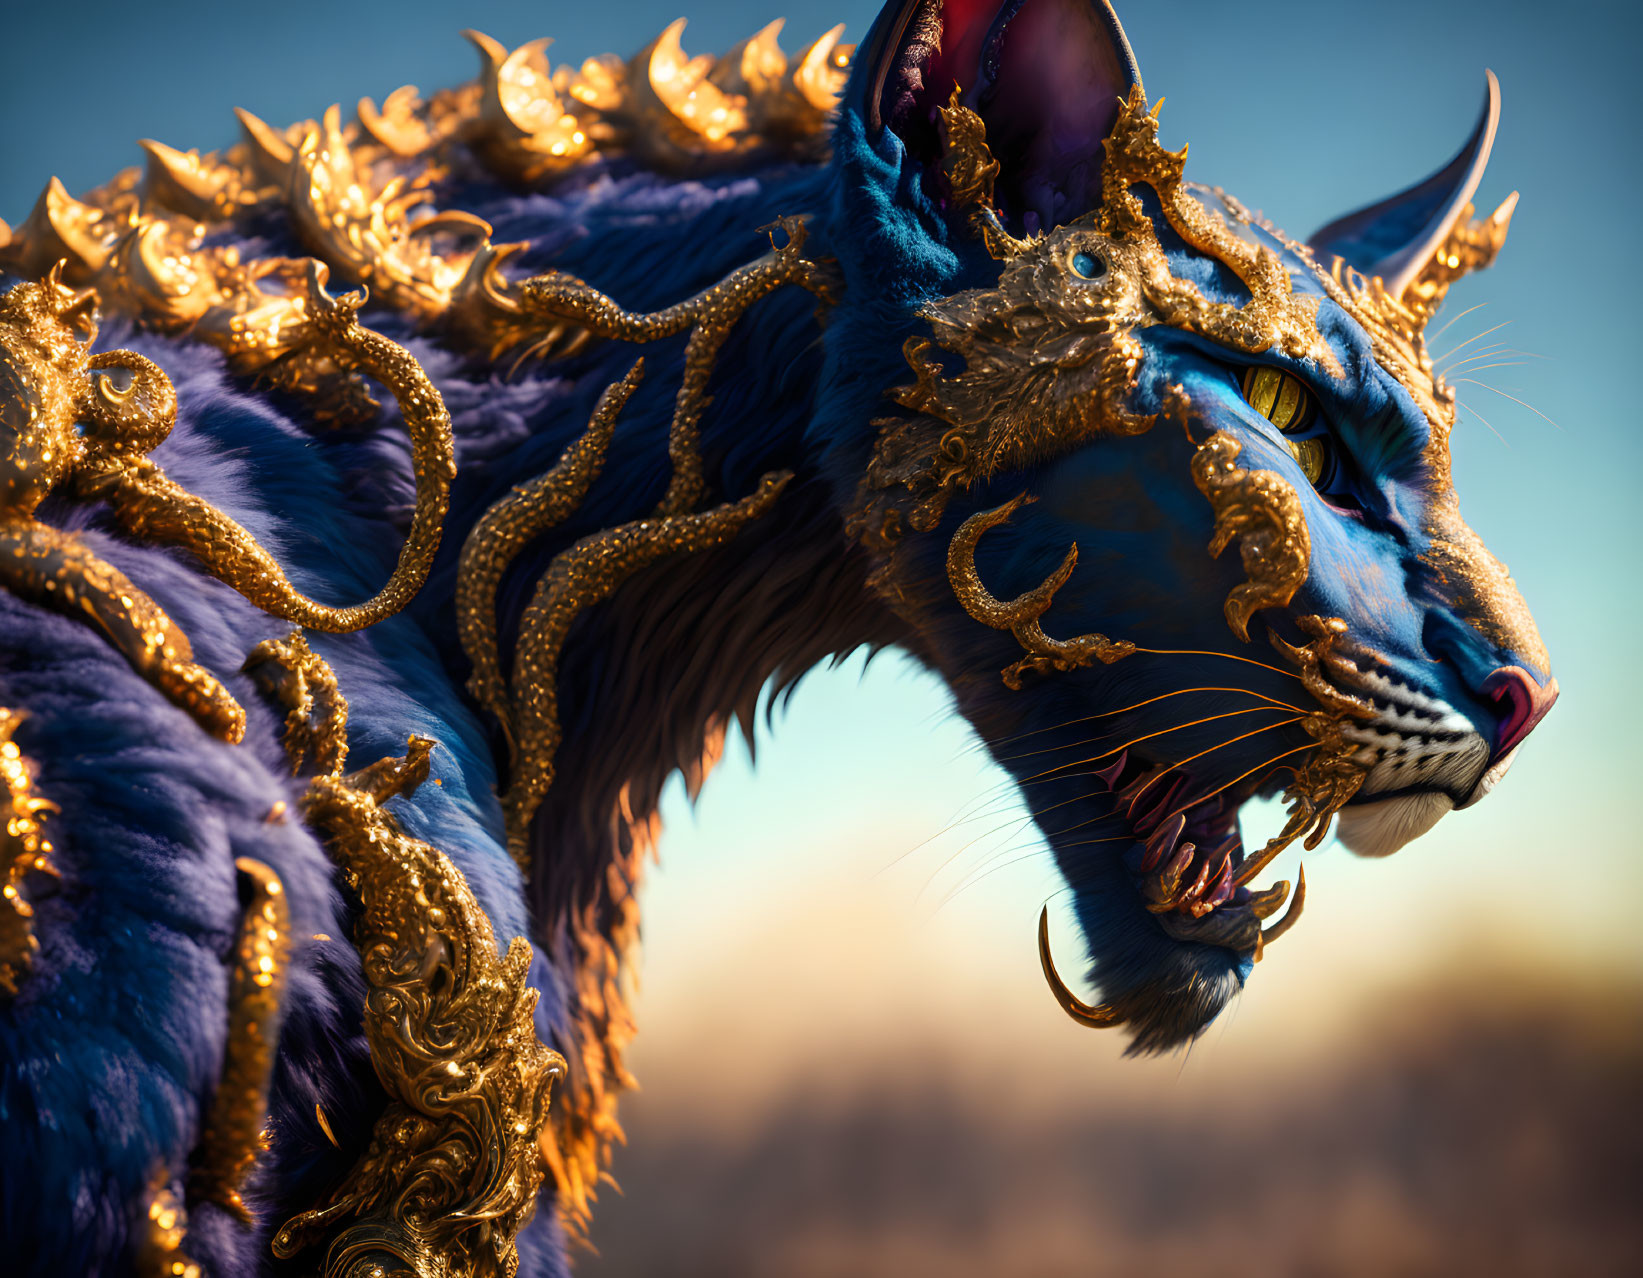 Detailed Digital Artwork: Mythical Blue Feline Creature with Golden Ornamentation